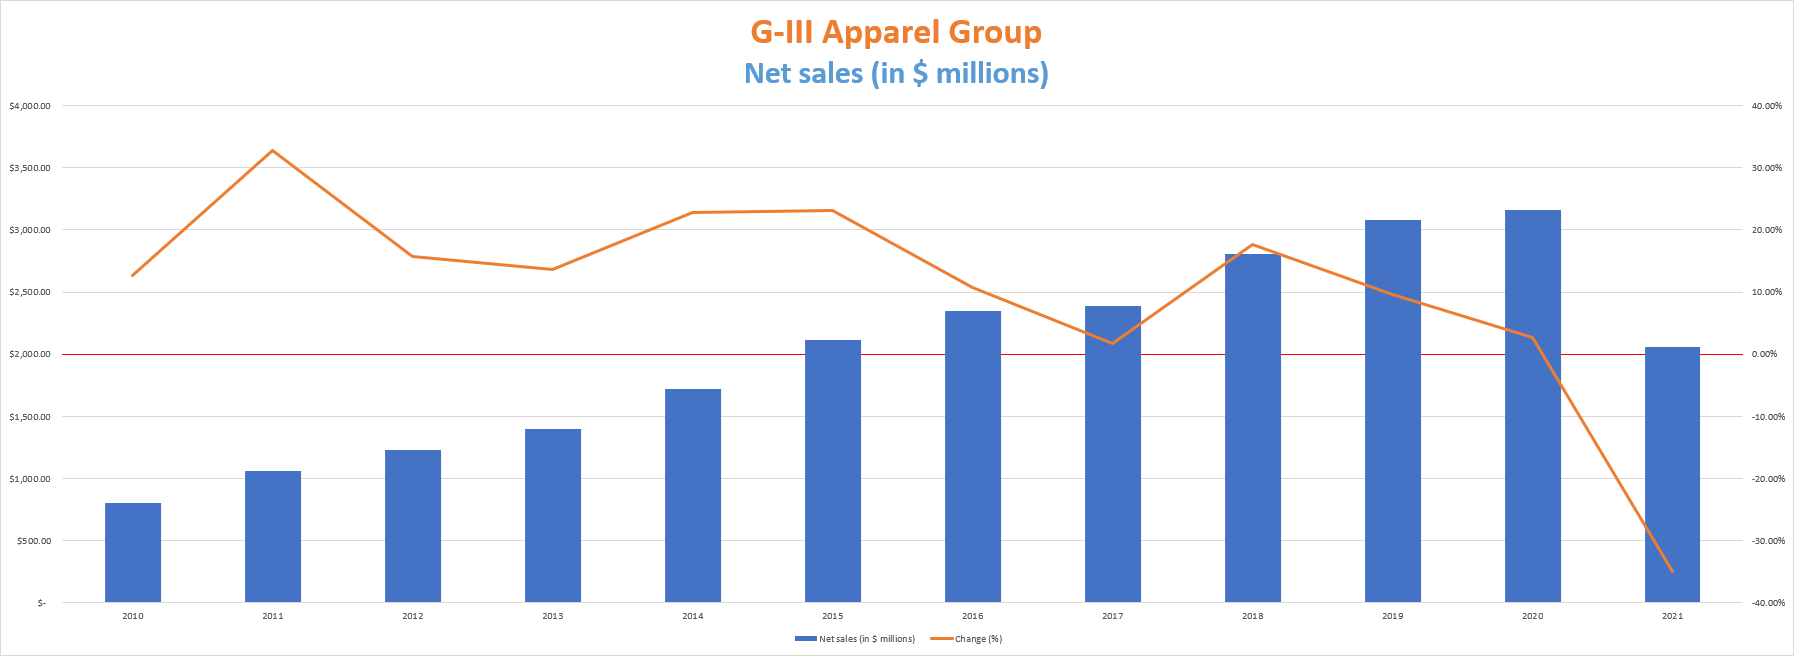 G-III Apparel Group Q2 net sales up 21.6%